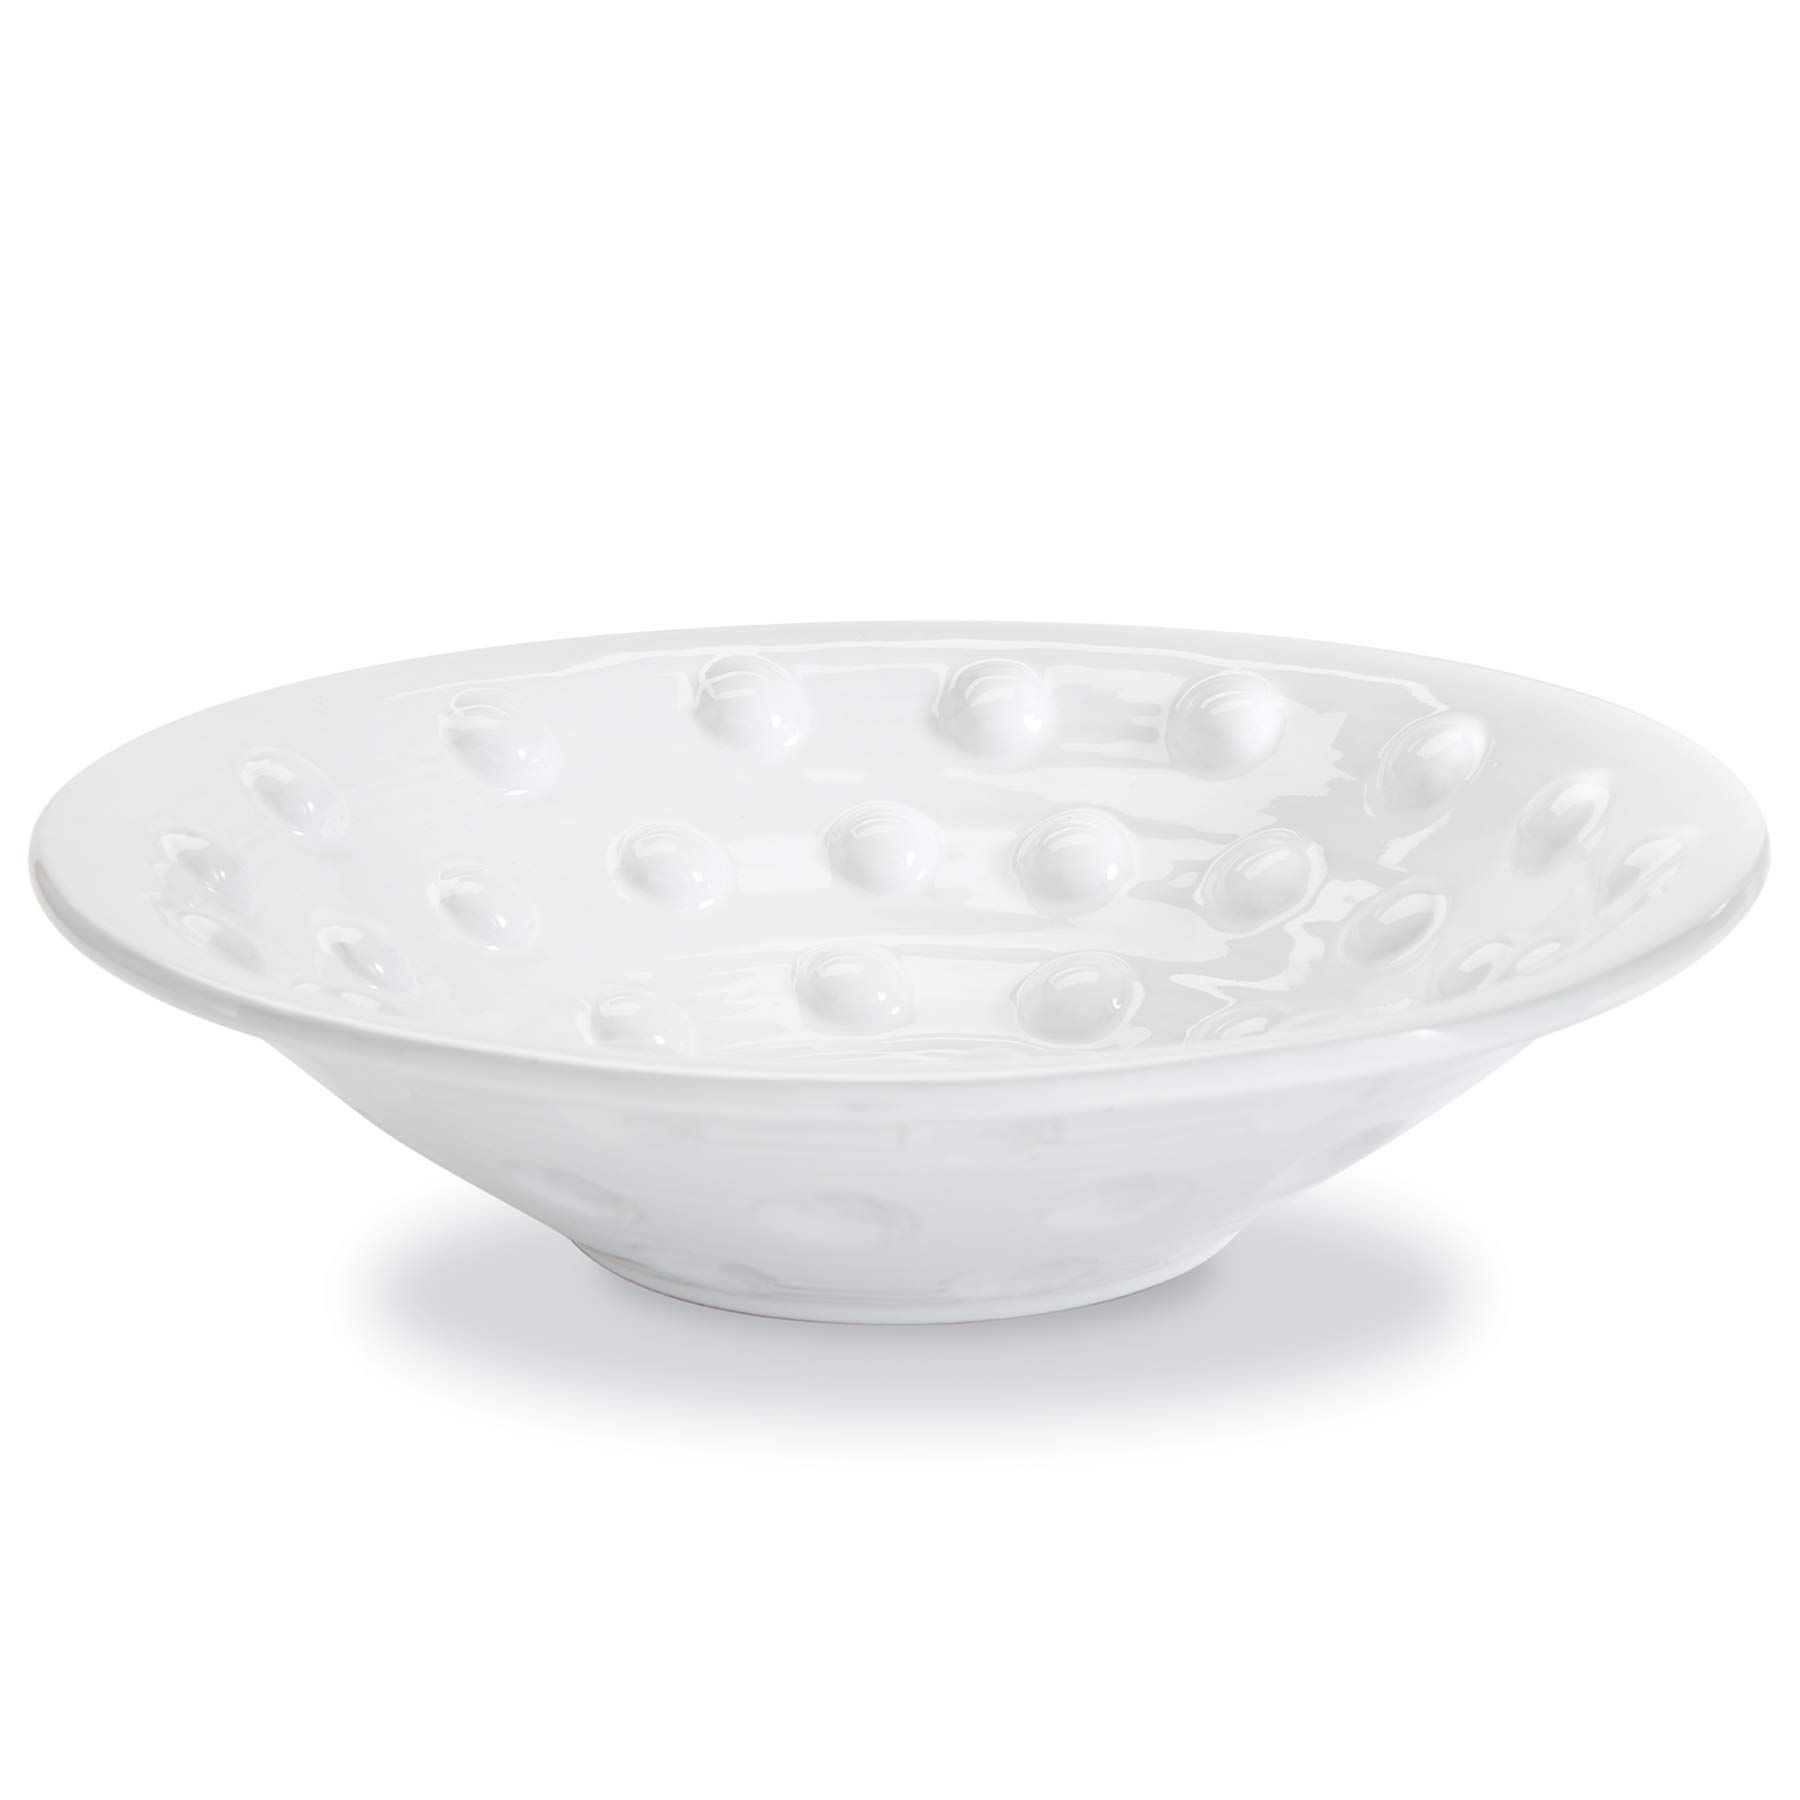 Mud Pie Home Sercing Raised Dot Centerpiece Bowl, white, "3 1/2"" x 14"" dia" (46000152) | Amazon (US)